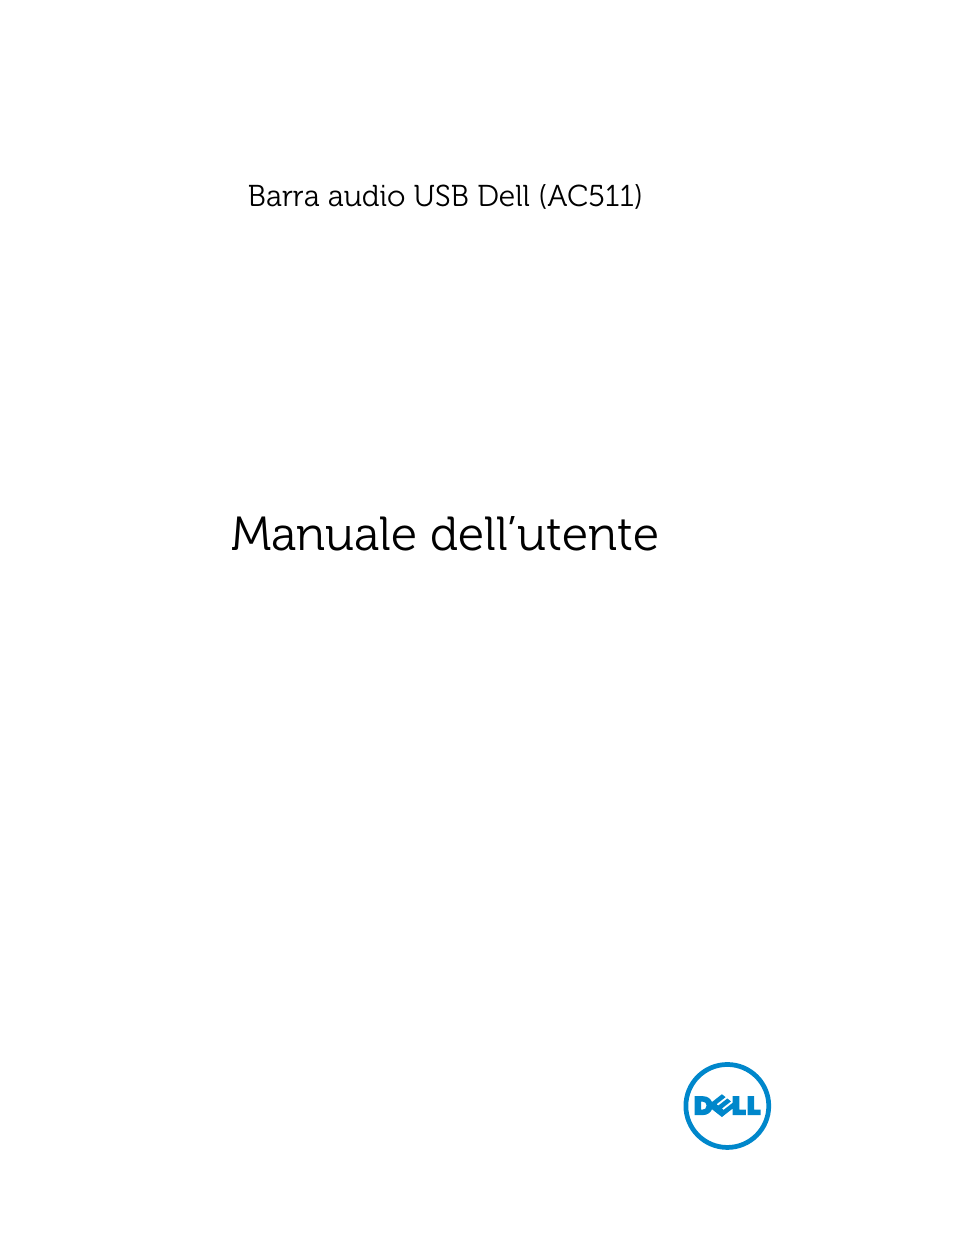 Dell USB Soundbar AC511 Manuale d'uso | Pagine: 15